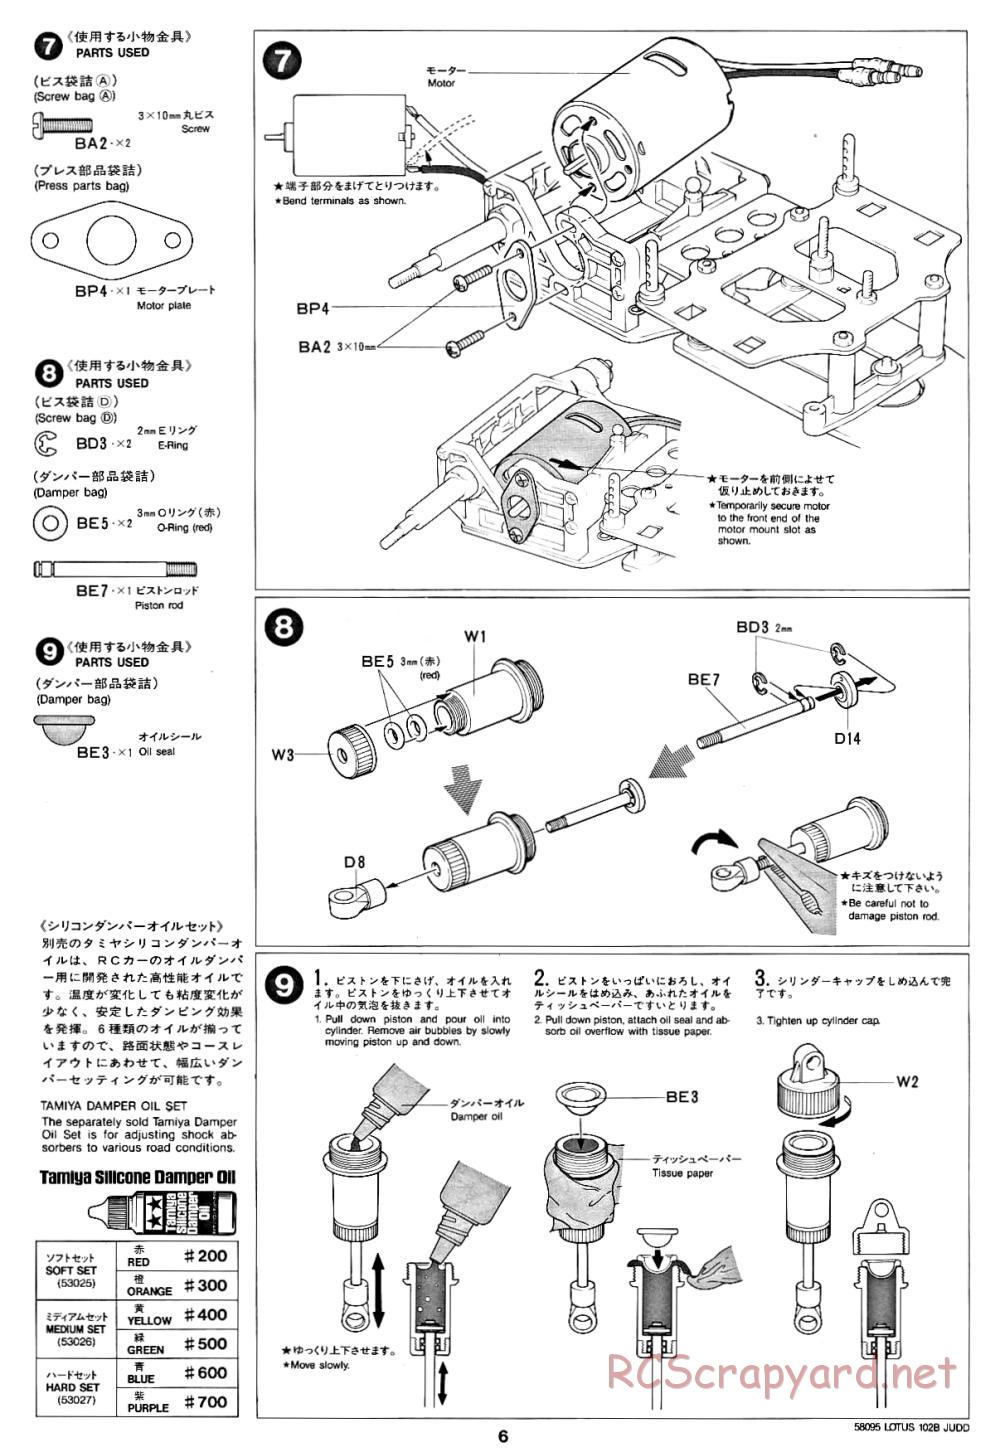 Tamiya - Lotus 102B Judd - 58095 - Manual - Page 6